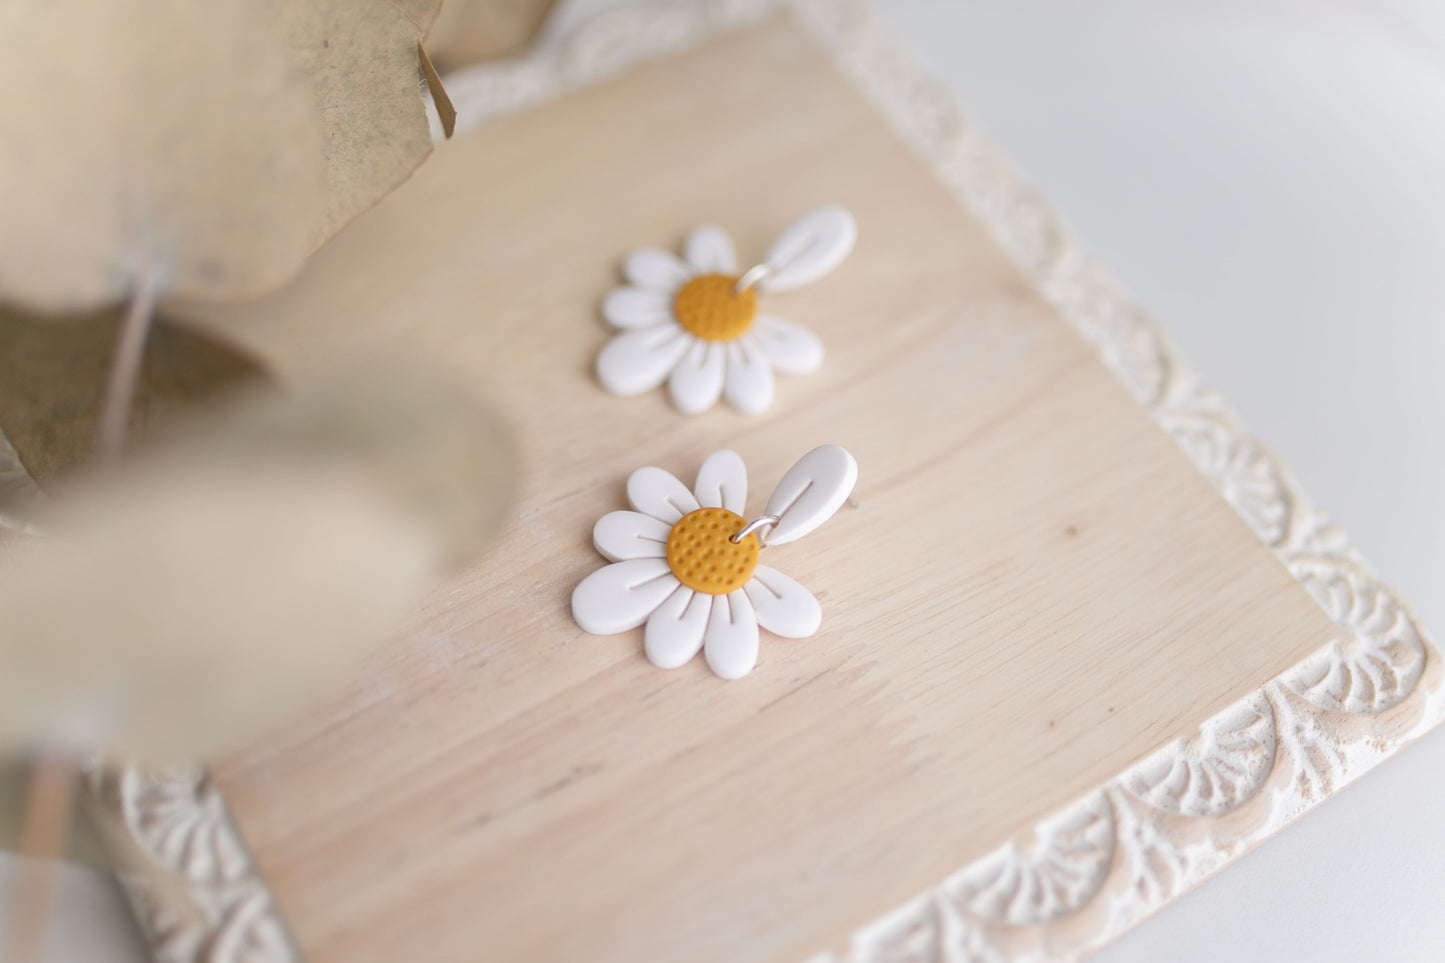 Clay earring | white daisy dangles